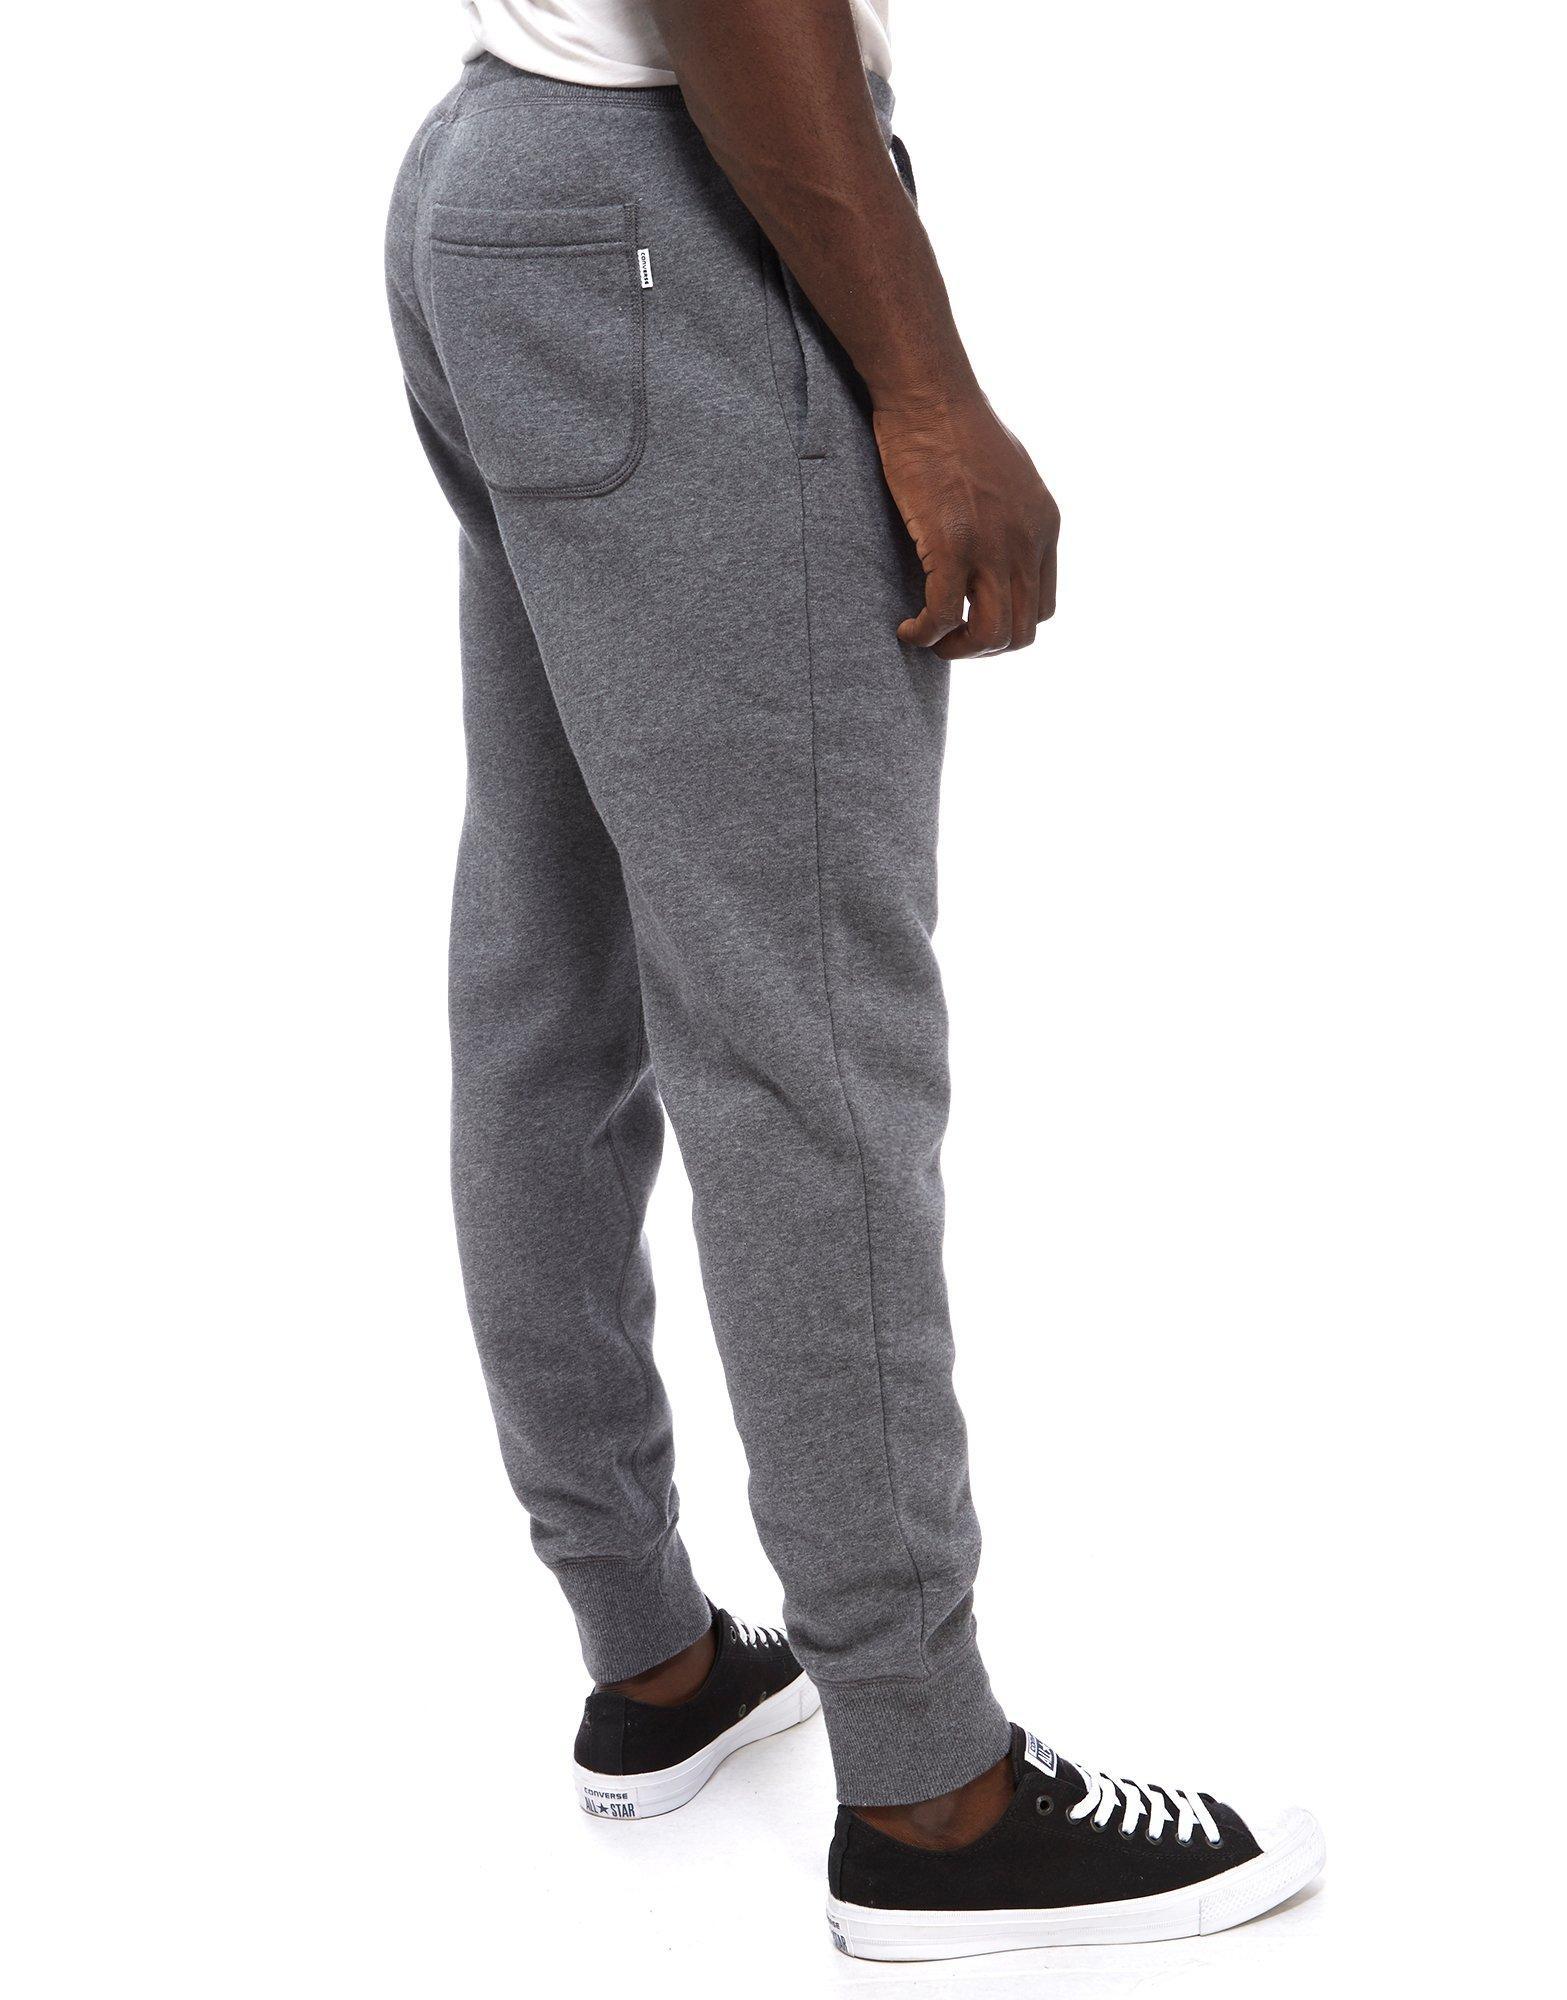 Converse Cotton Chuck Jogger in Grey (Grey) for Men - Lyst